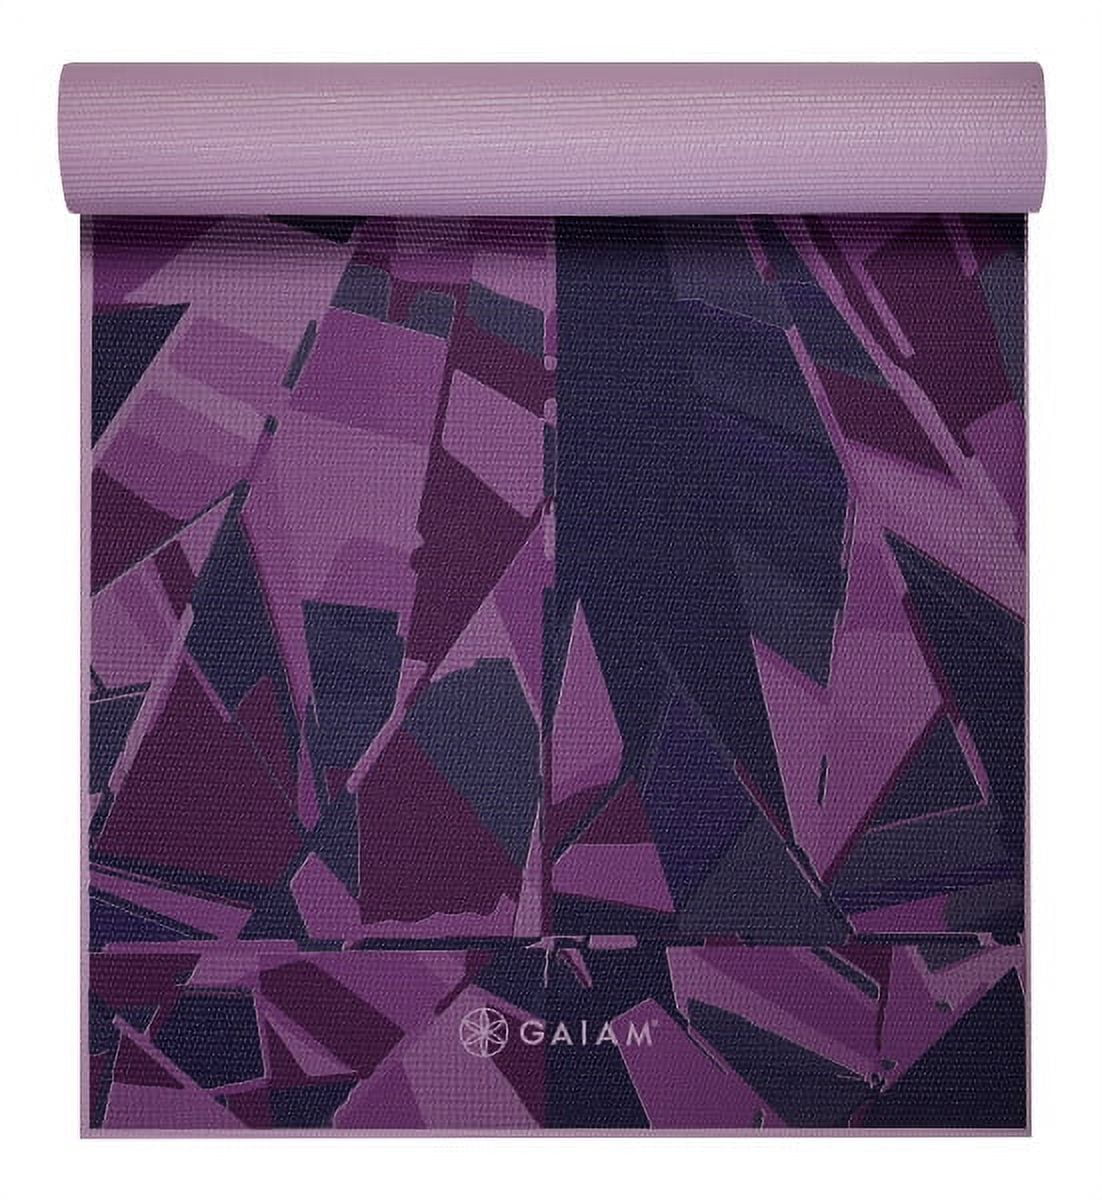 Gaiam Premium Print Yoga Mat, Granite Mountains, 6mm 